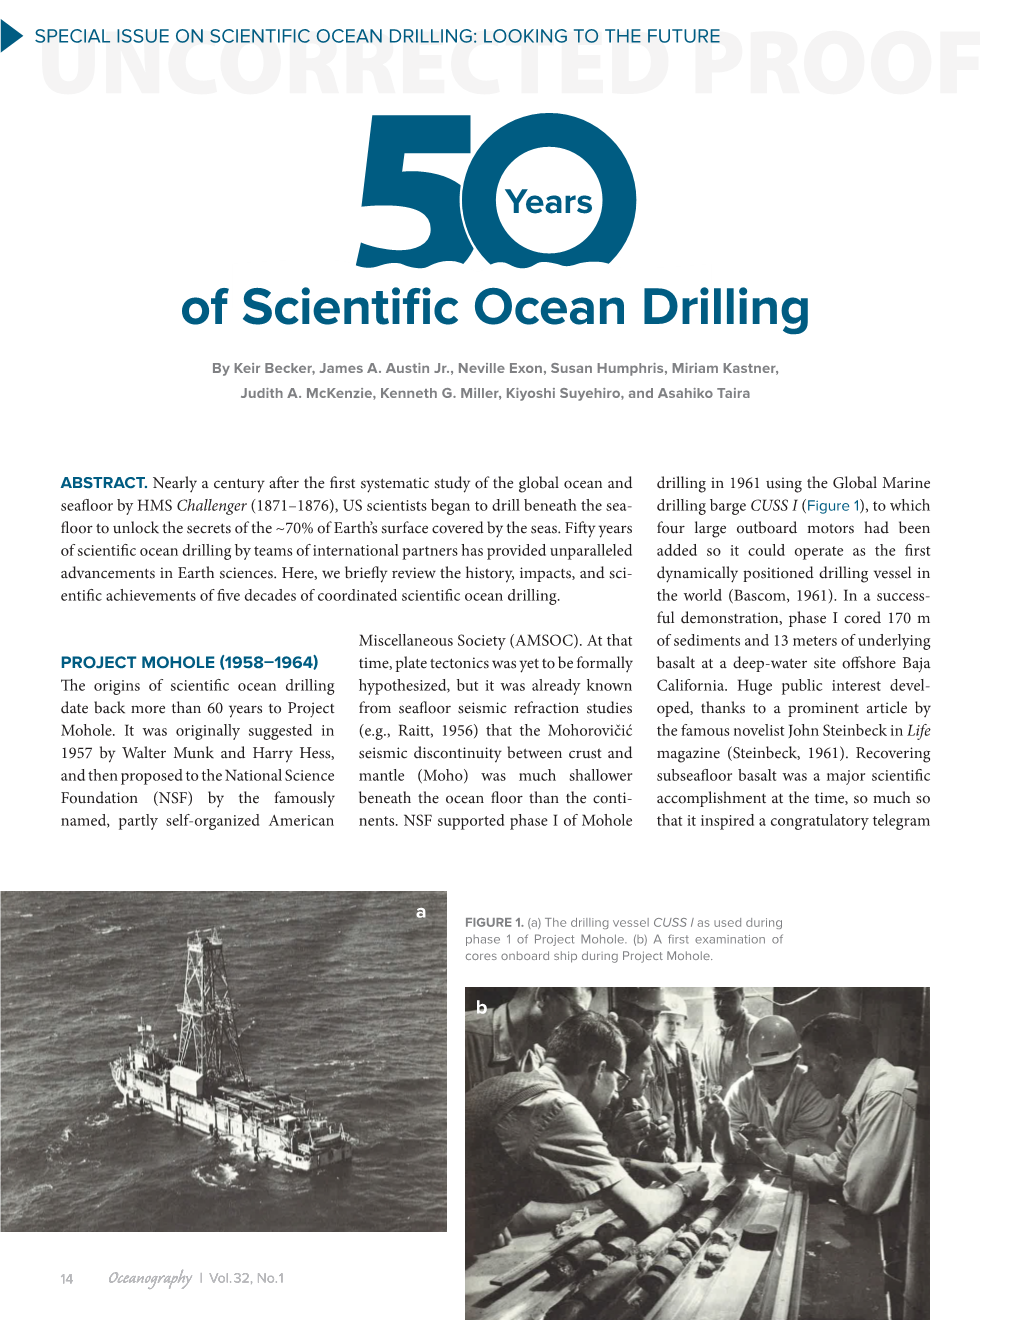 Years 5Of Scientific Ocean Drilling